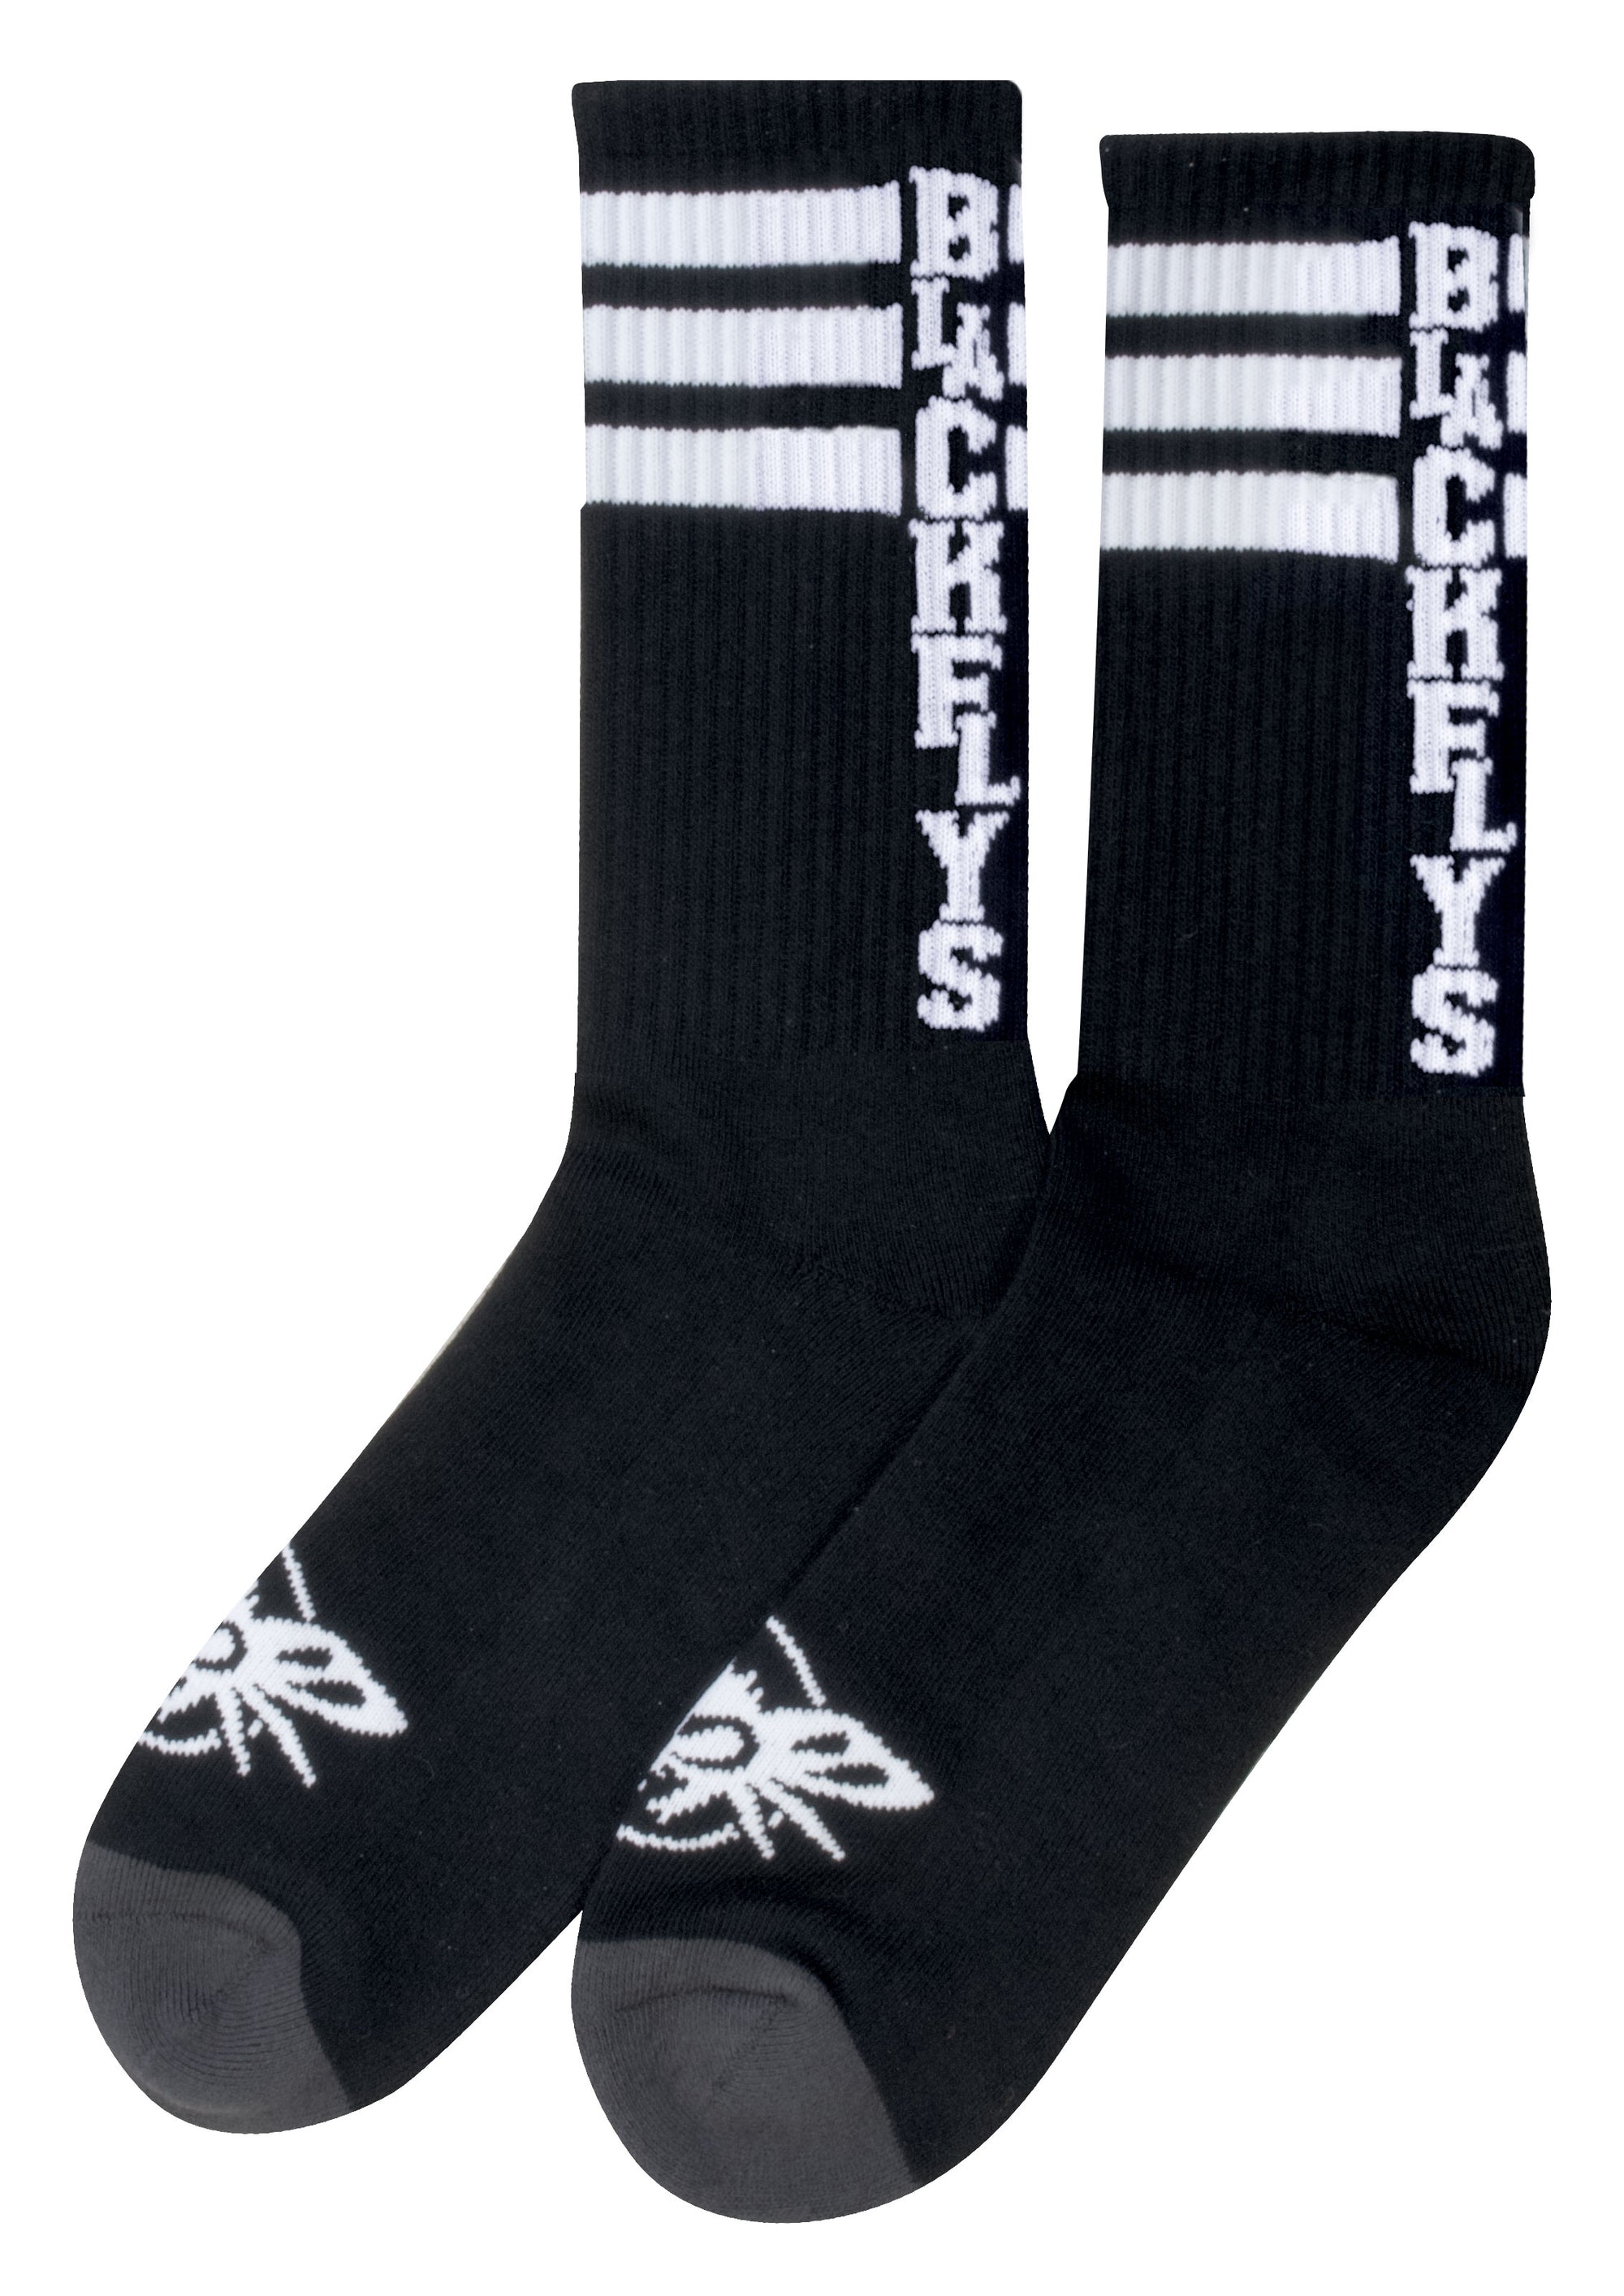 Fly Striper Socks